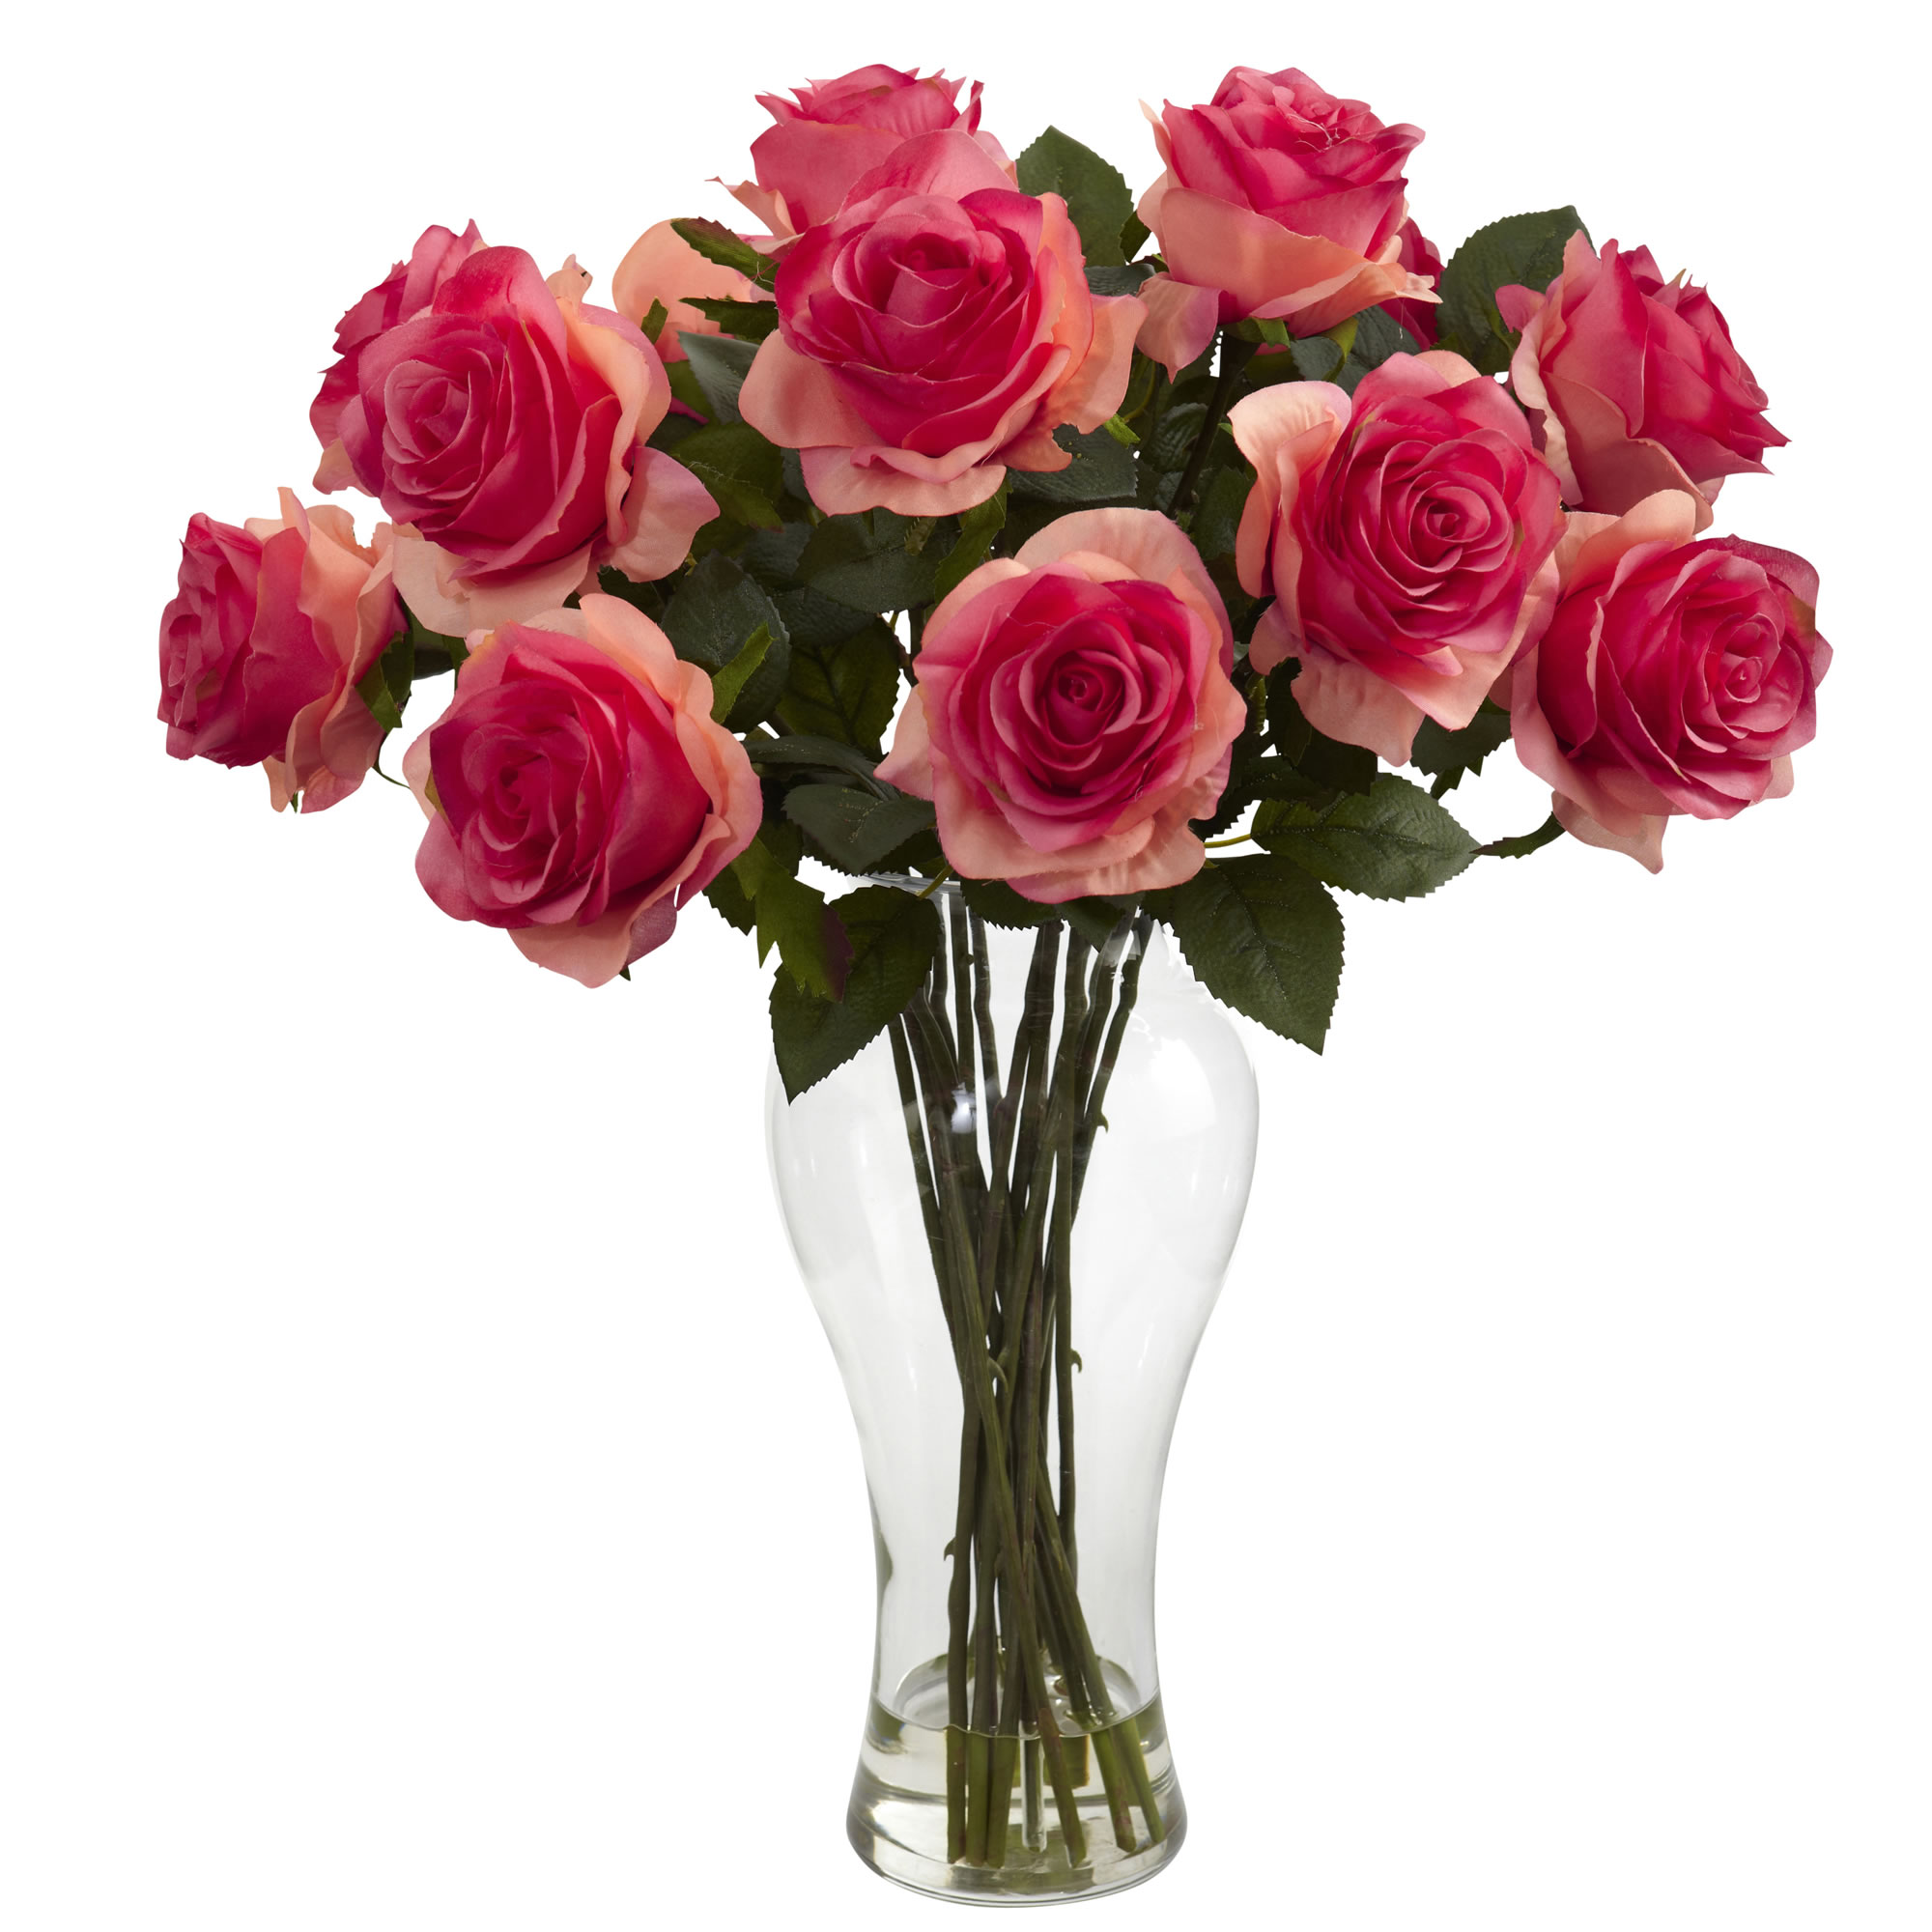 18 inch Artificial Blooming Roses Arrangement in Vase | 1328